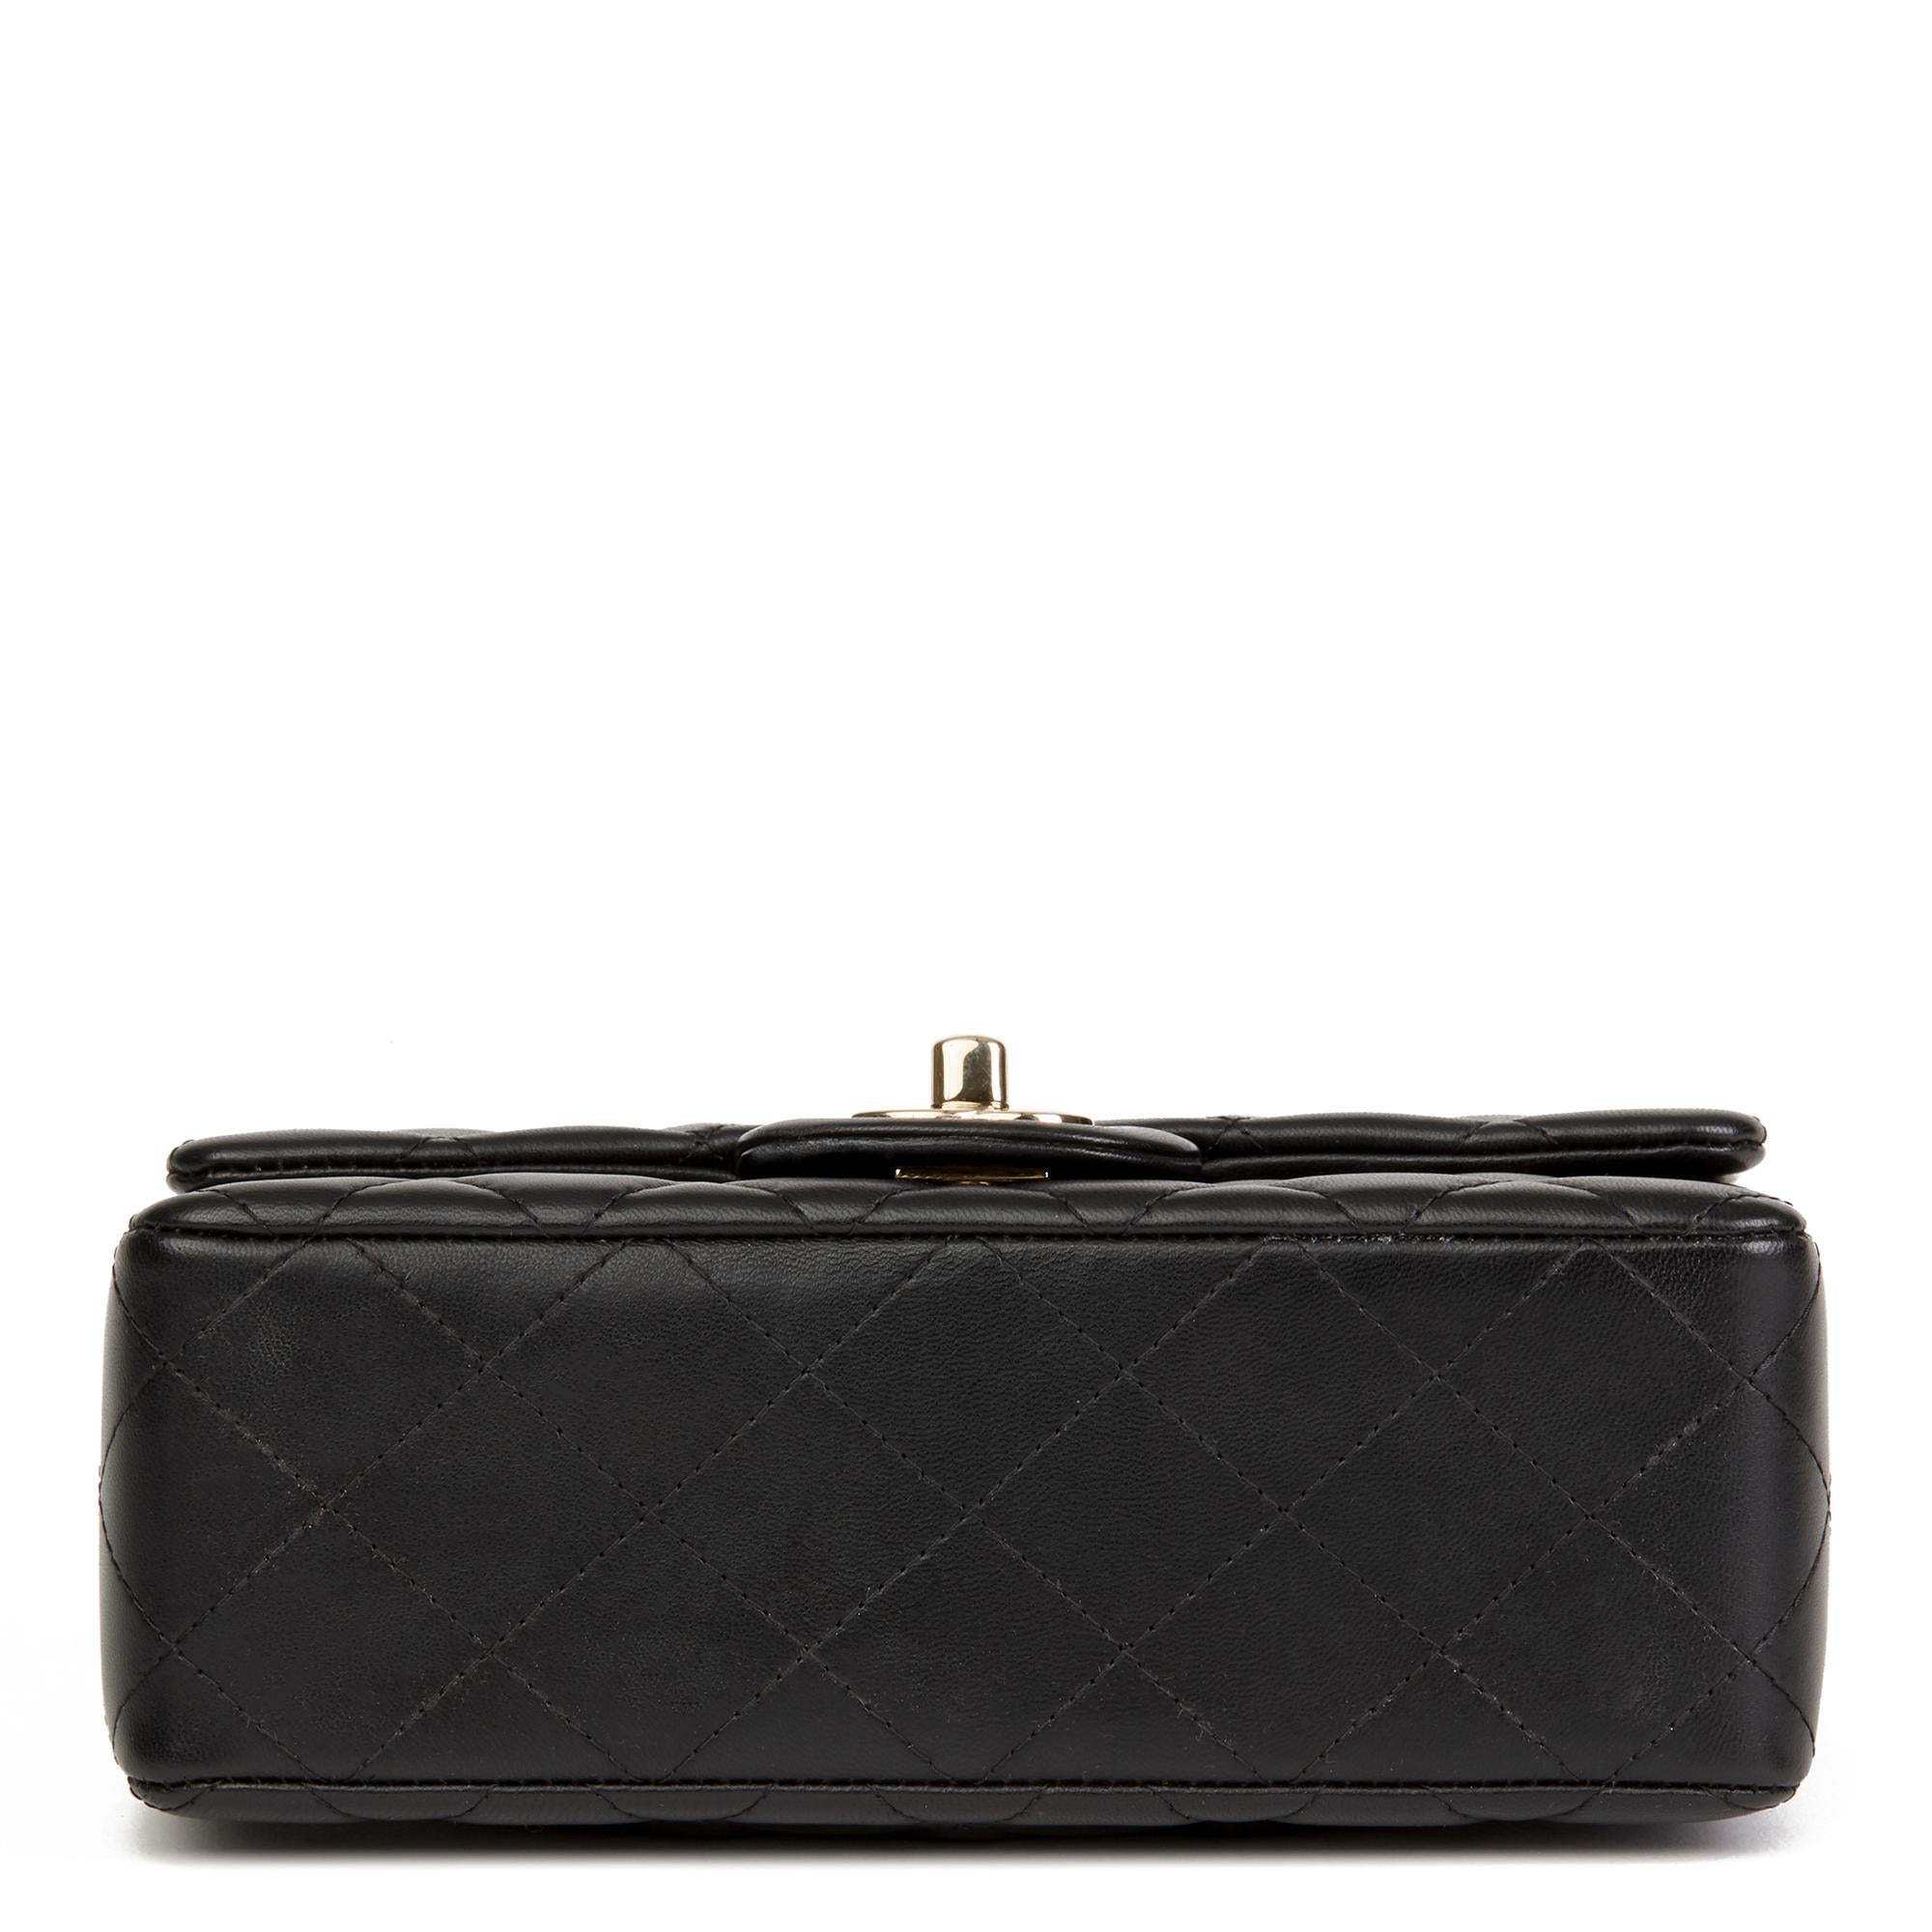 2017 Chanel Black Quilted Lambskin Rectangular Mini Flap Bag 1